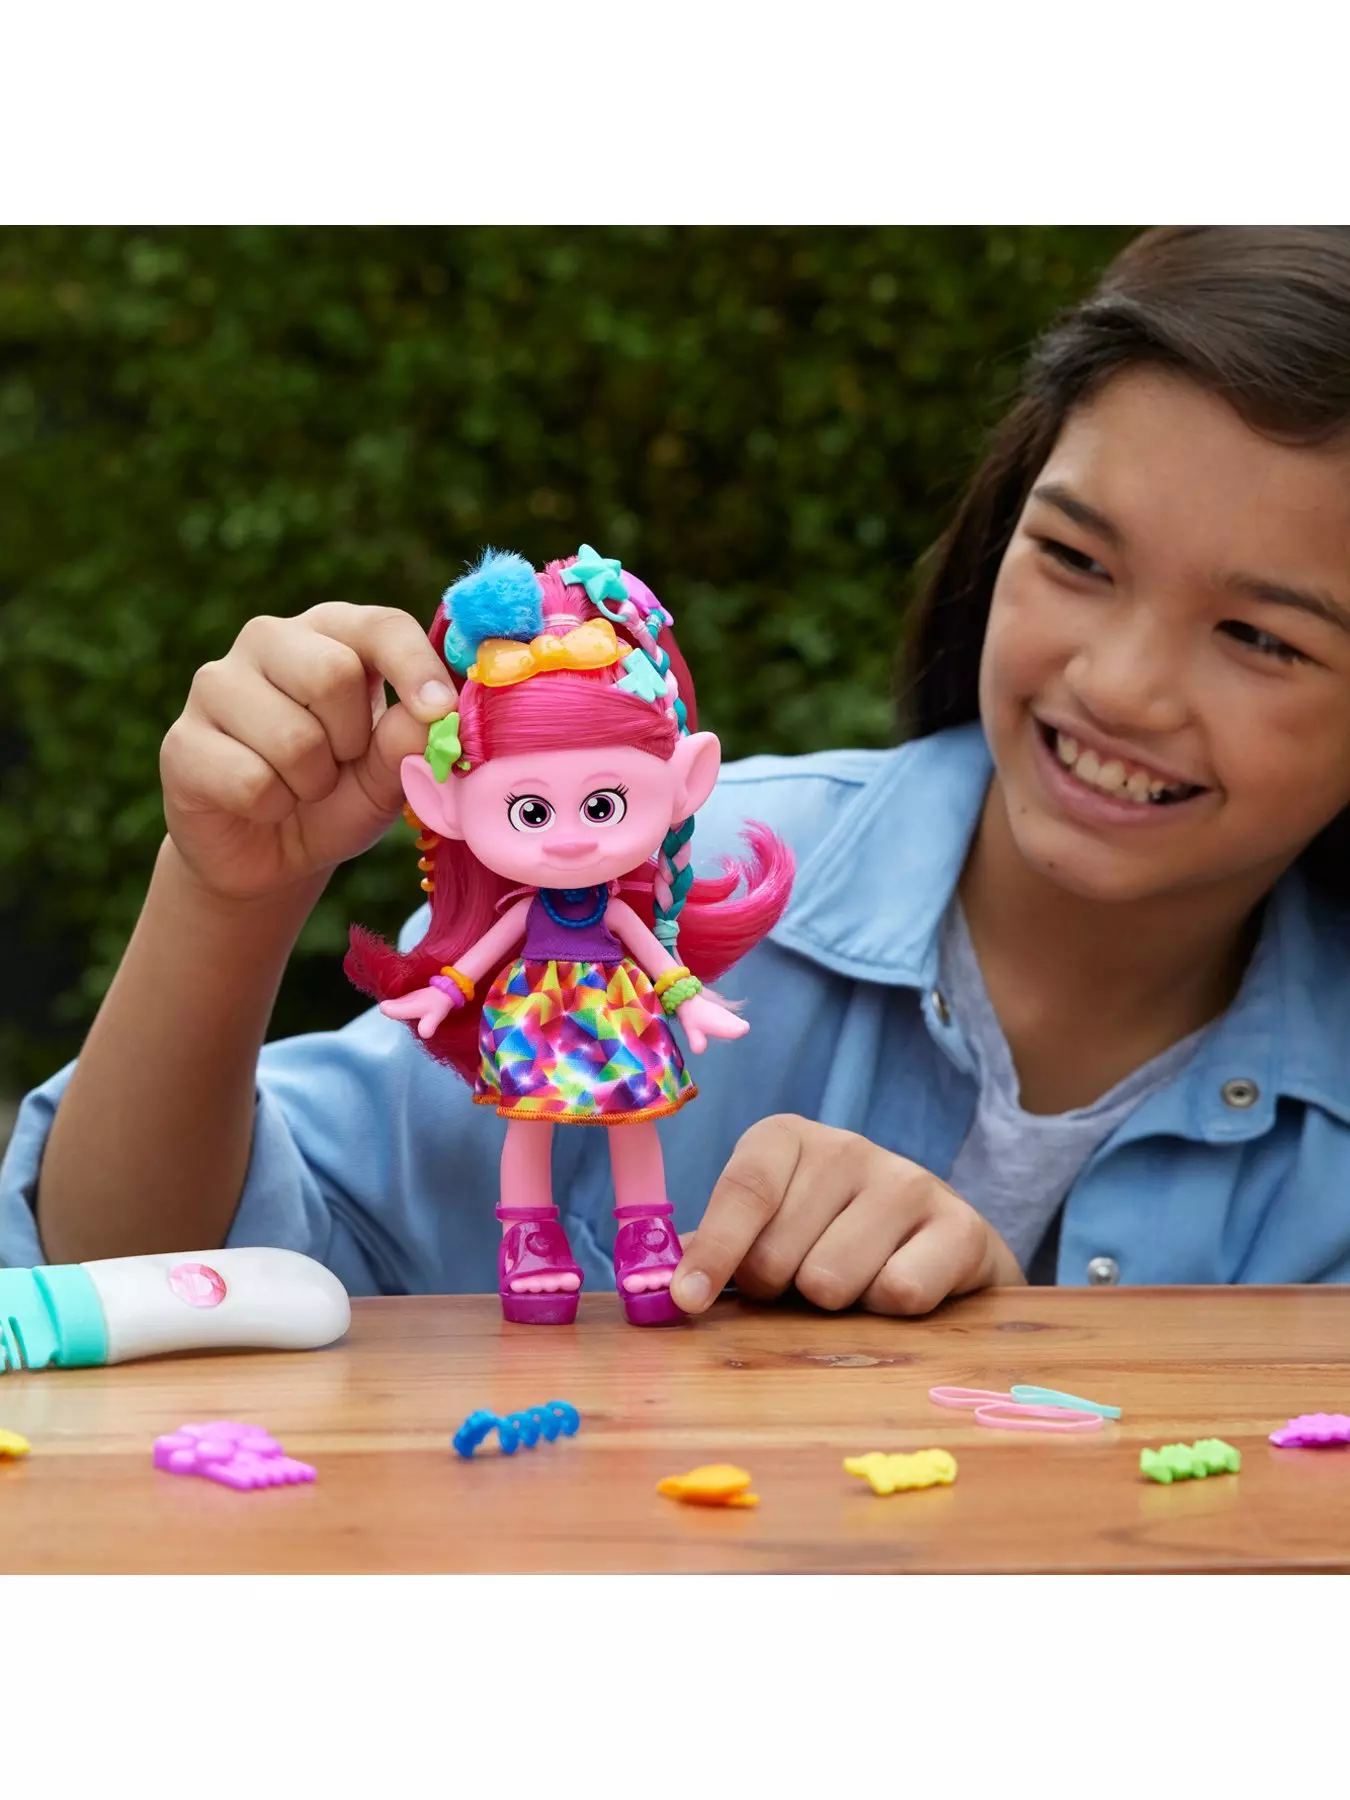 Play-Doh Dreamworks Trolls Press N Style Salon Model Kit